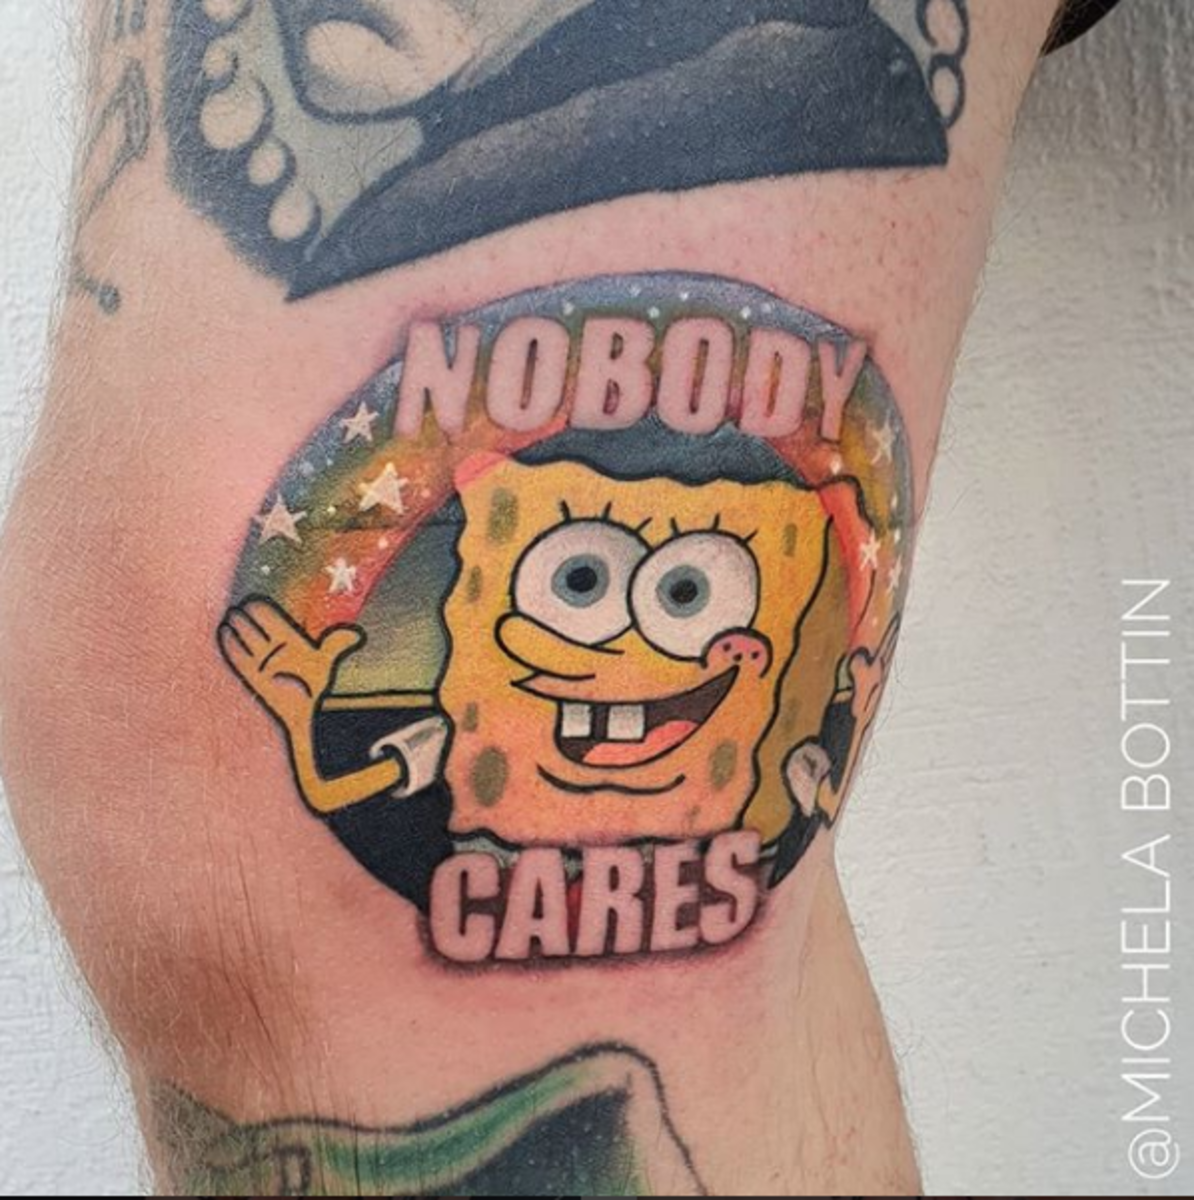 What tattoo does Chris Nunez own?